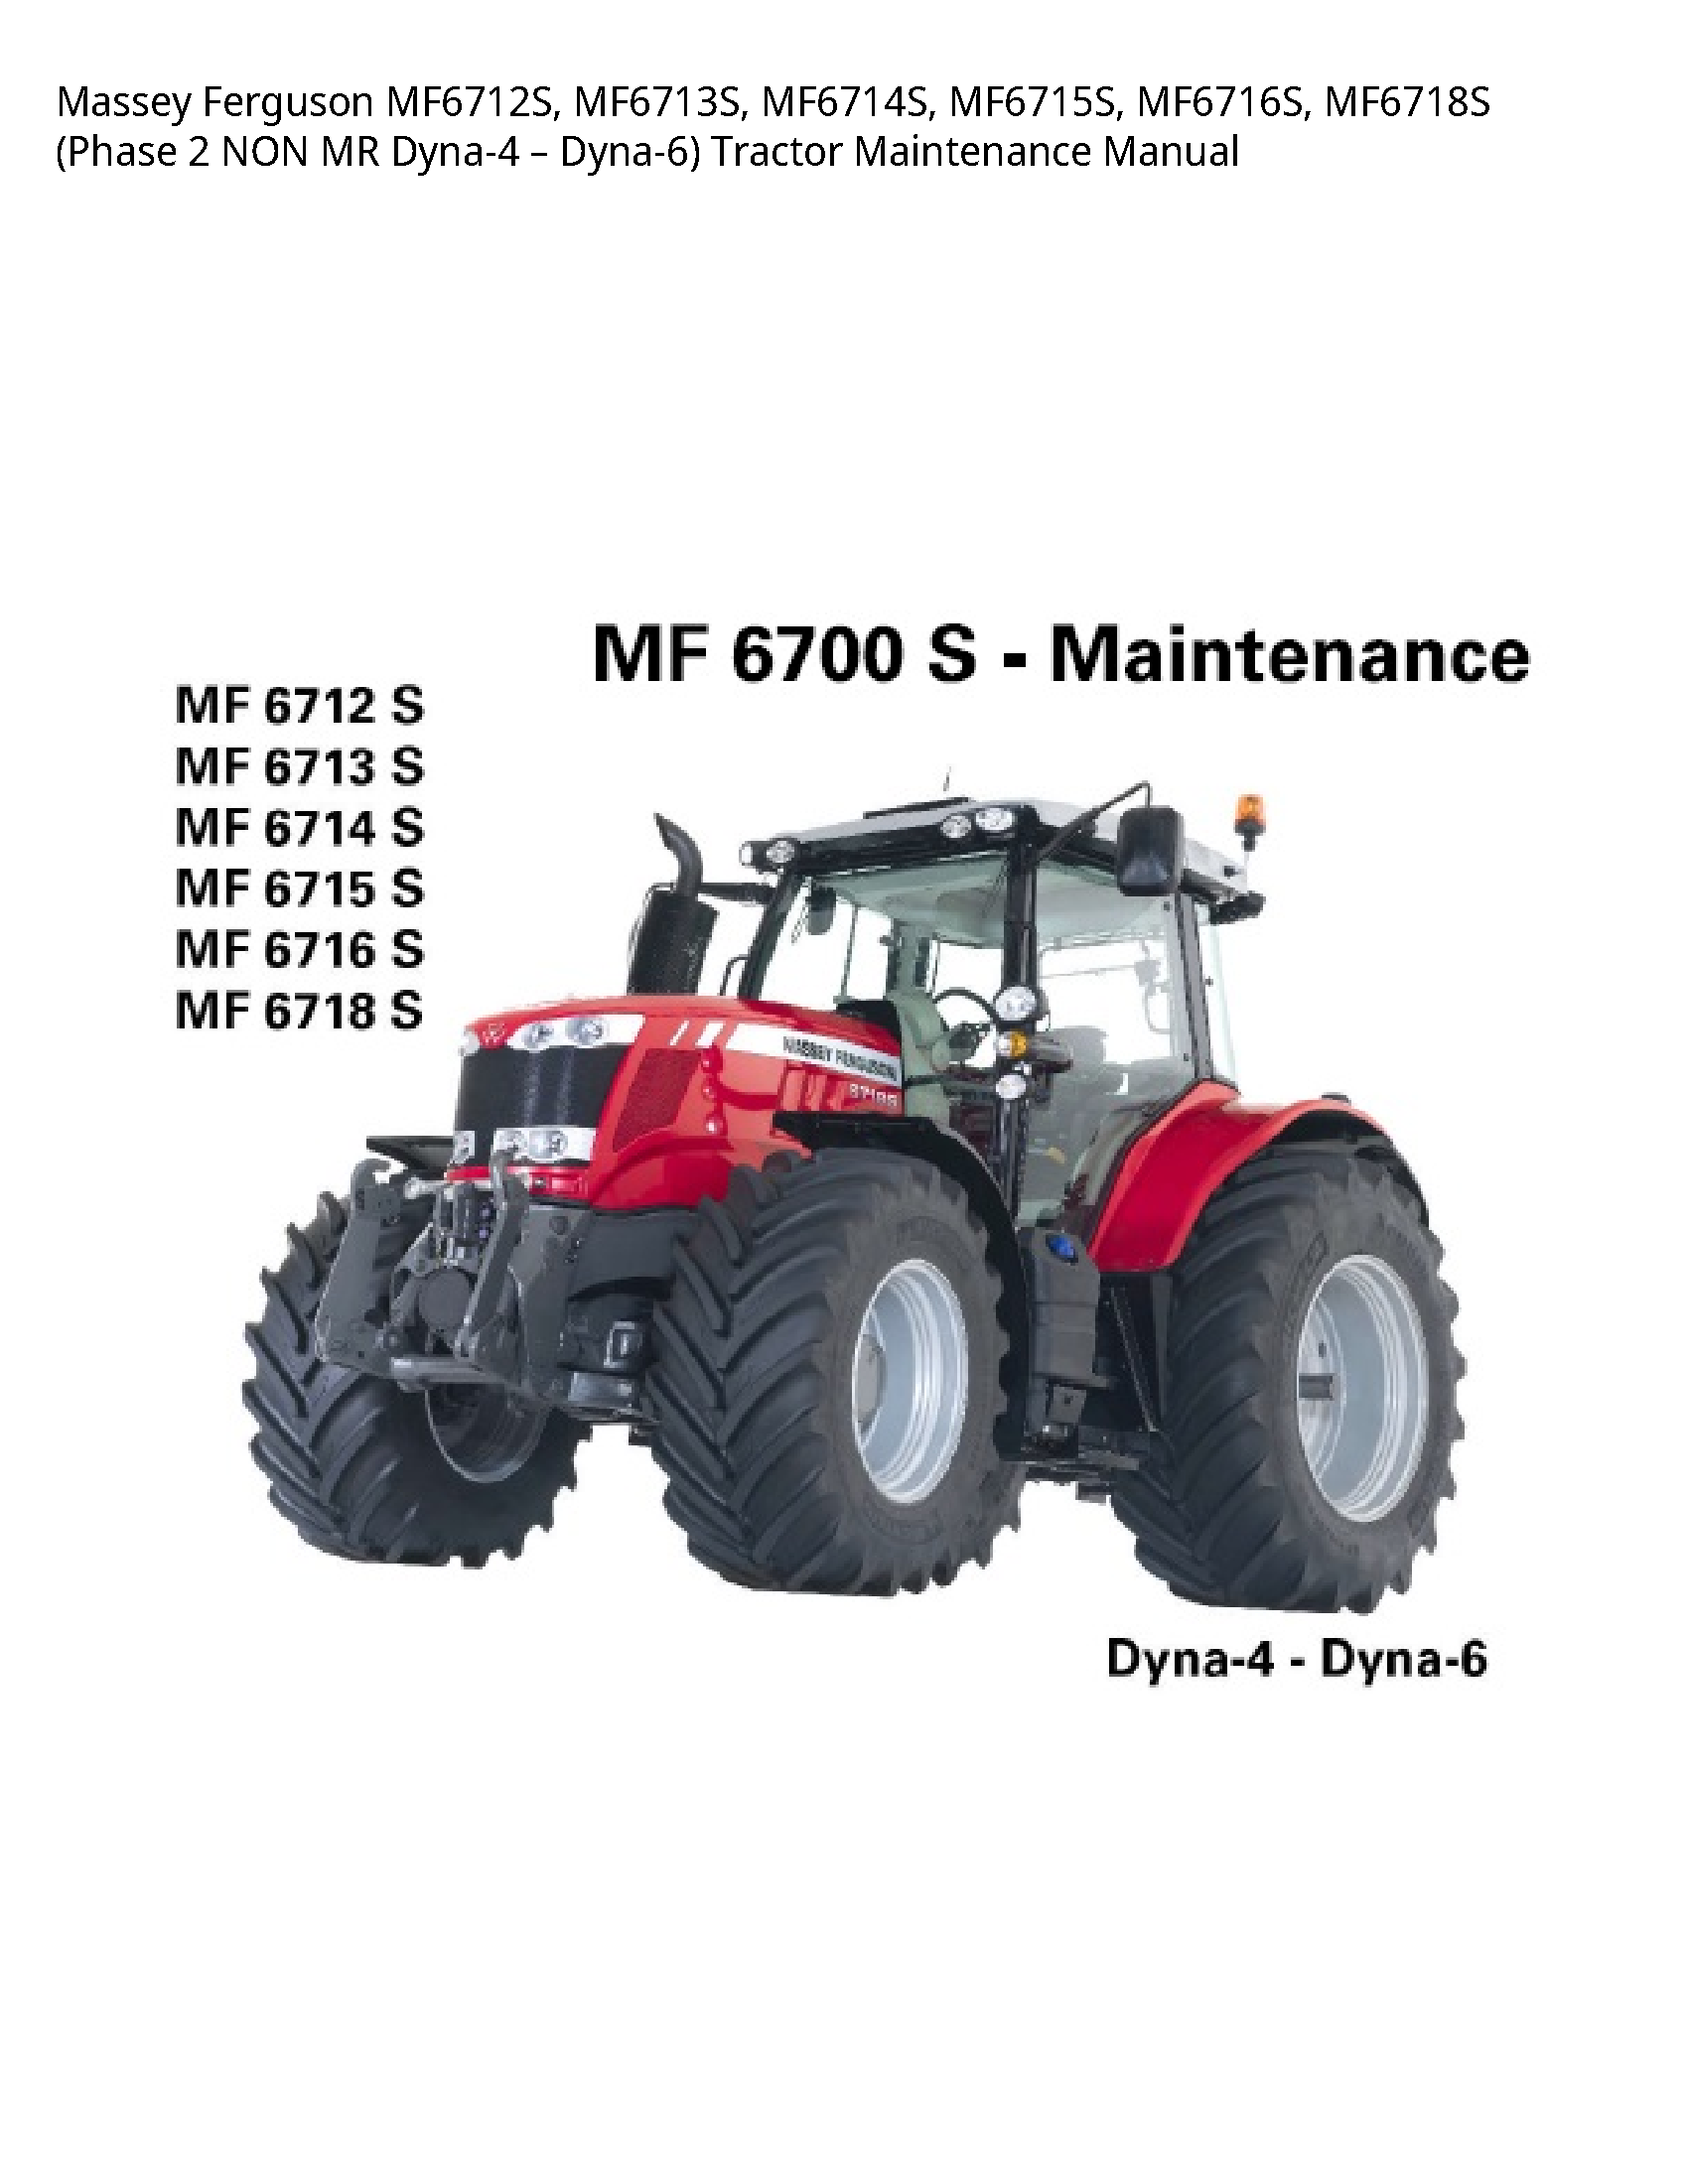 Massey Ferguson MF6712S (Phase NON MR Tractor Maintenance manual